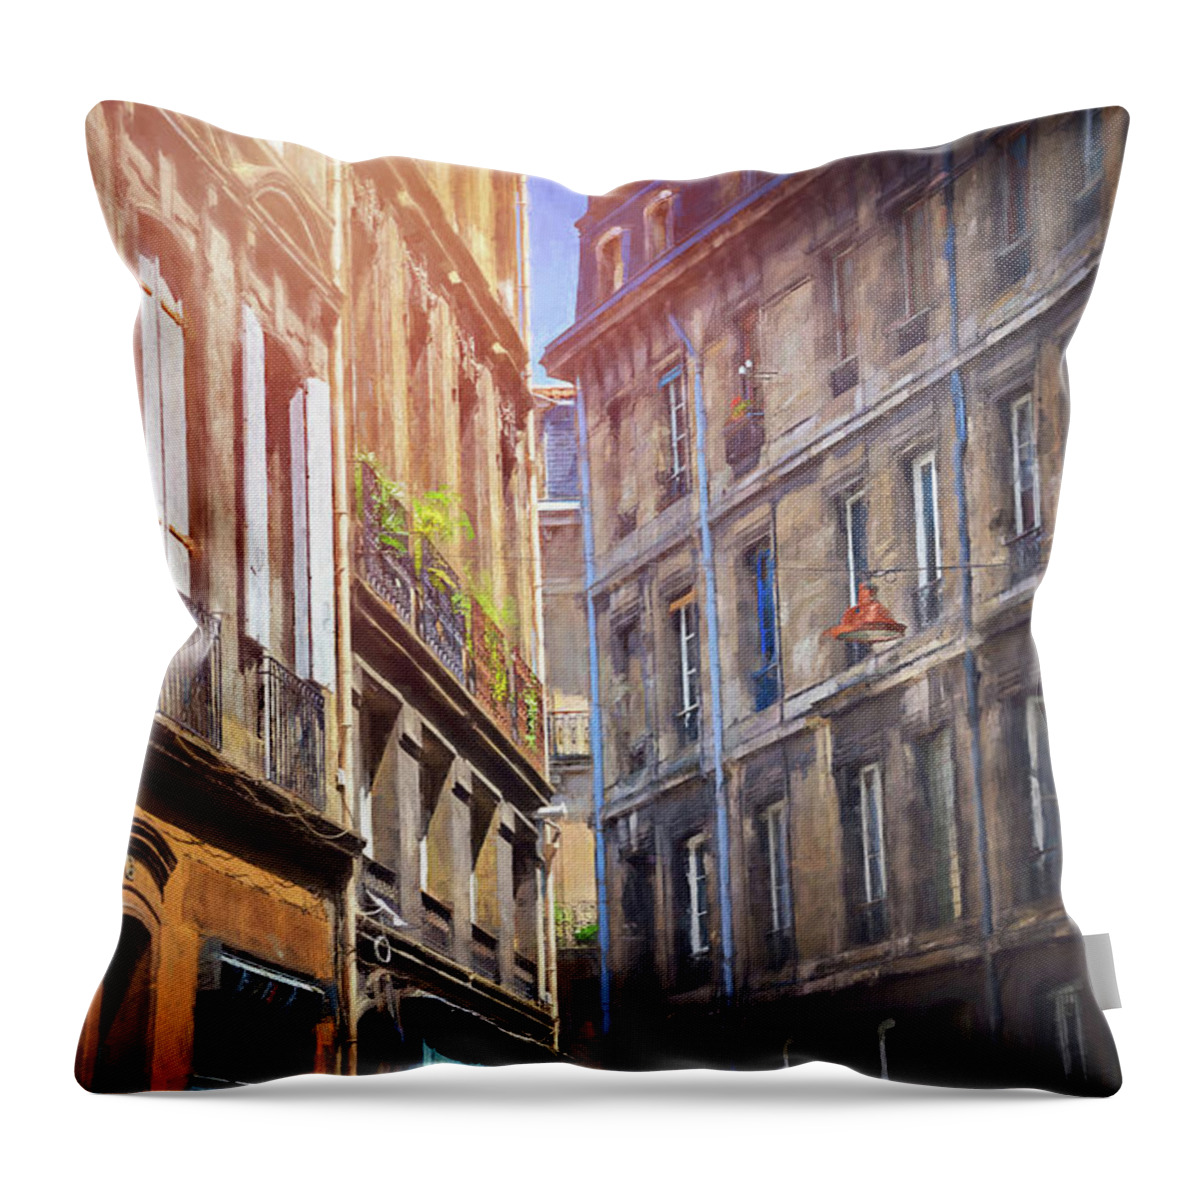 Bordeaux Throw Pillow featuring the photograph Vintage Windows of Bordeaux France by Carol Japp